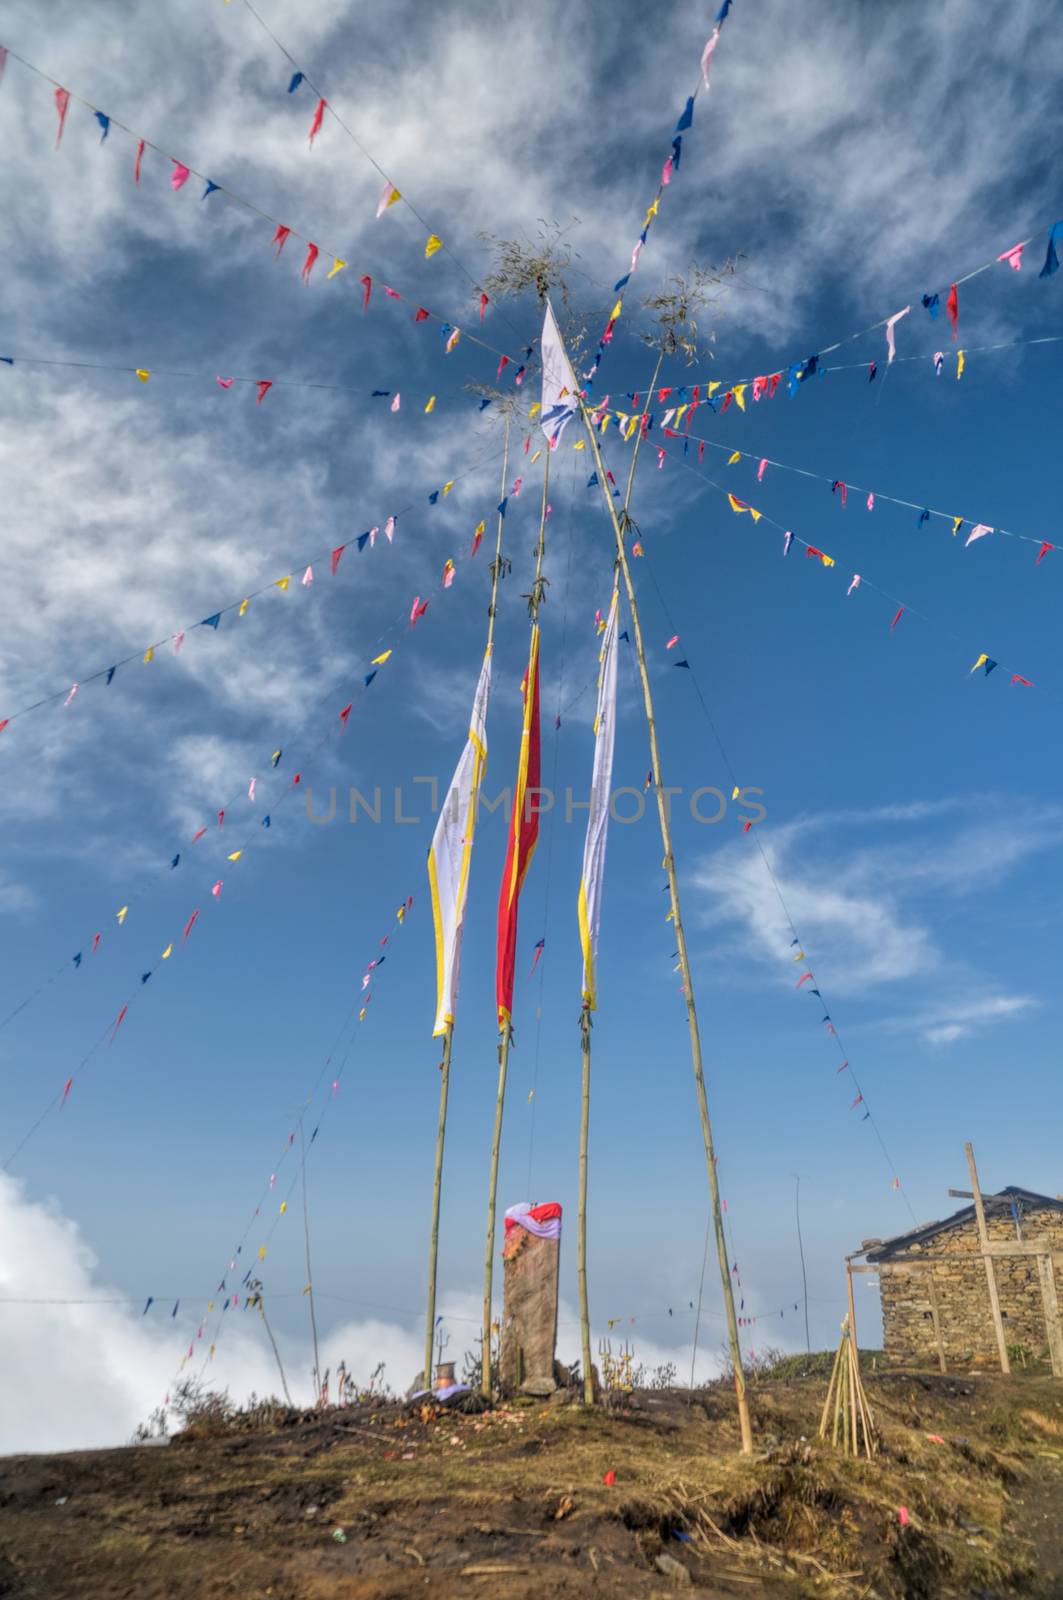 Buddhist prayer flags in Nepal by MichalKnitl